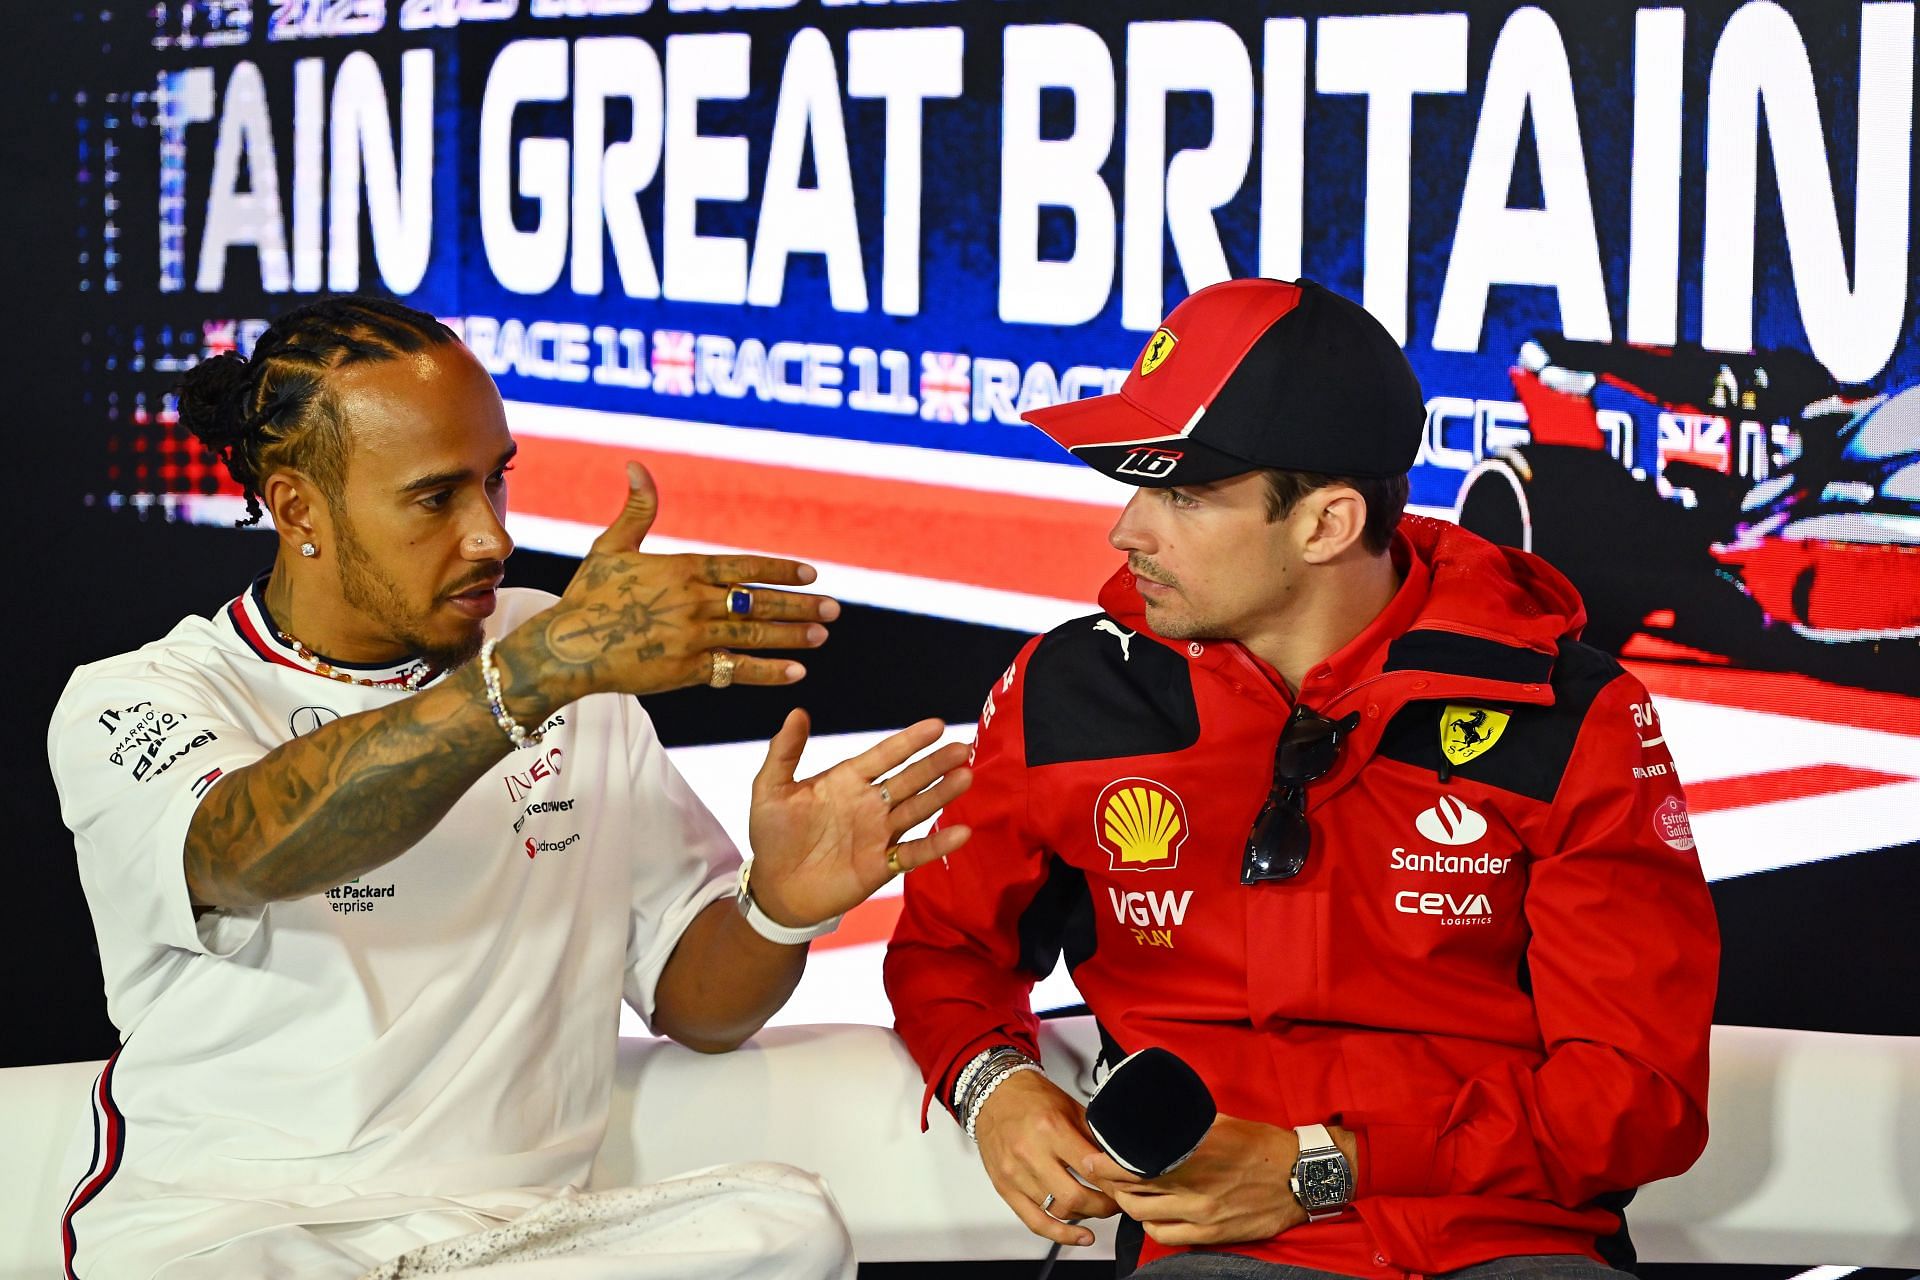 F1 Grand Prix of Great Britain - Previews